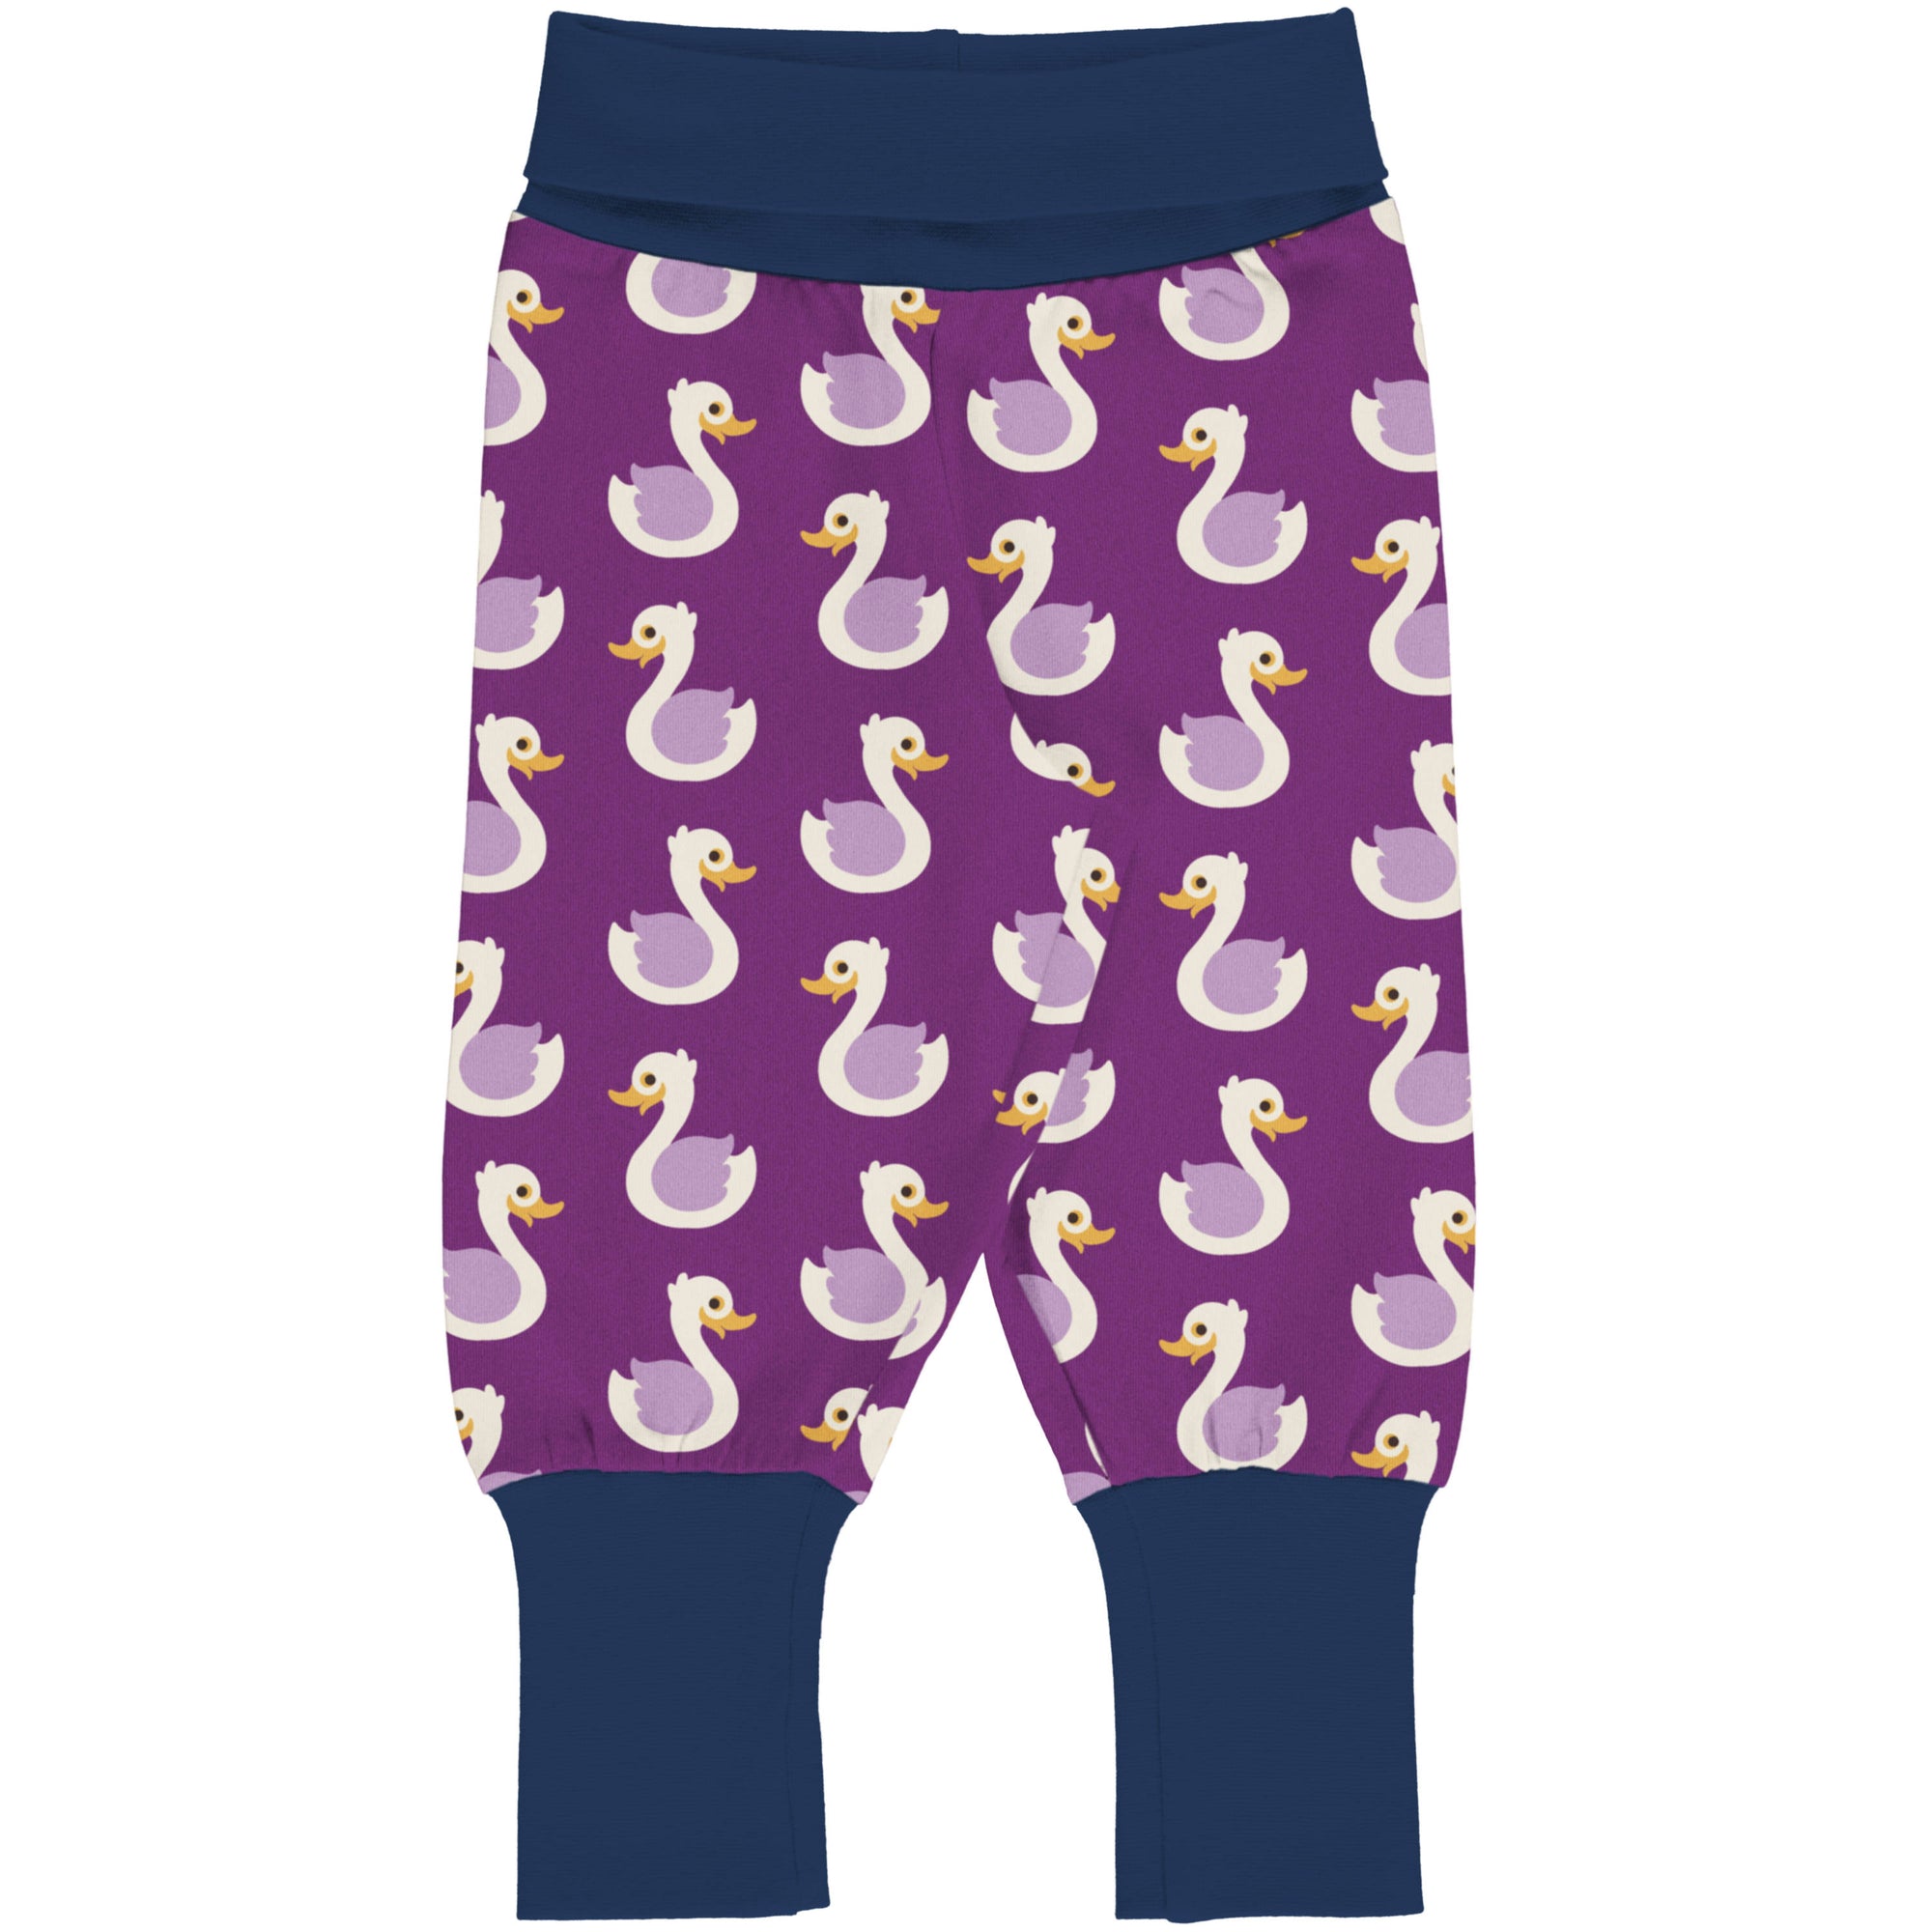 Maxomorra Swan Infant Pants Dxa2307 Clothing 3-6M / Purple,9-12M / Purple,18-24M / Purple